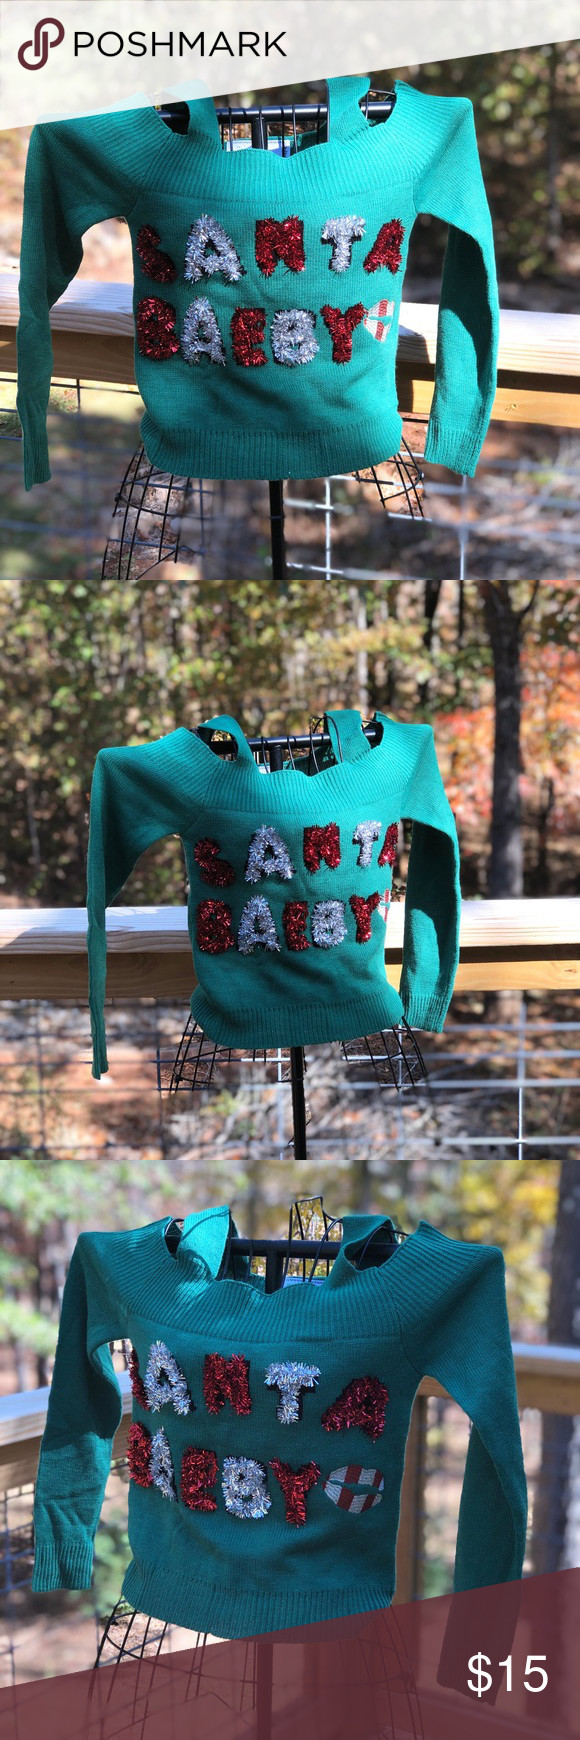 Small Bachelorette Party Ideas
 Santa Babey Shirt Size Small